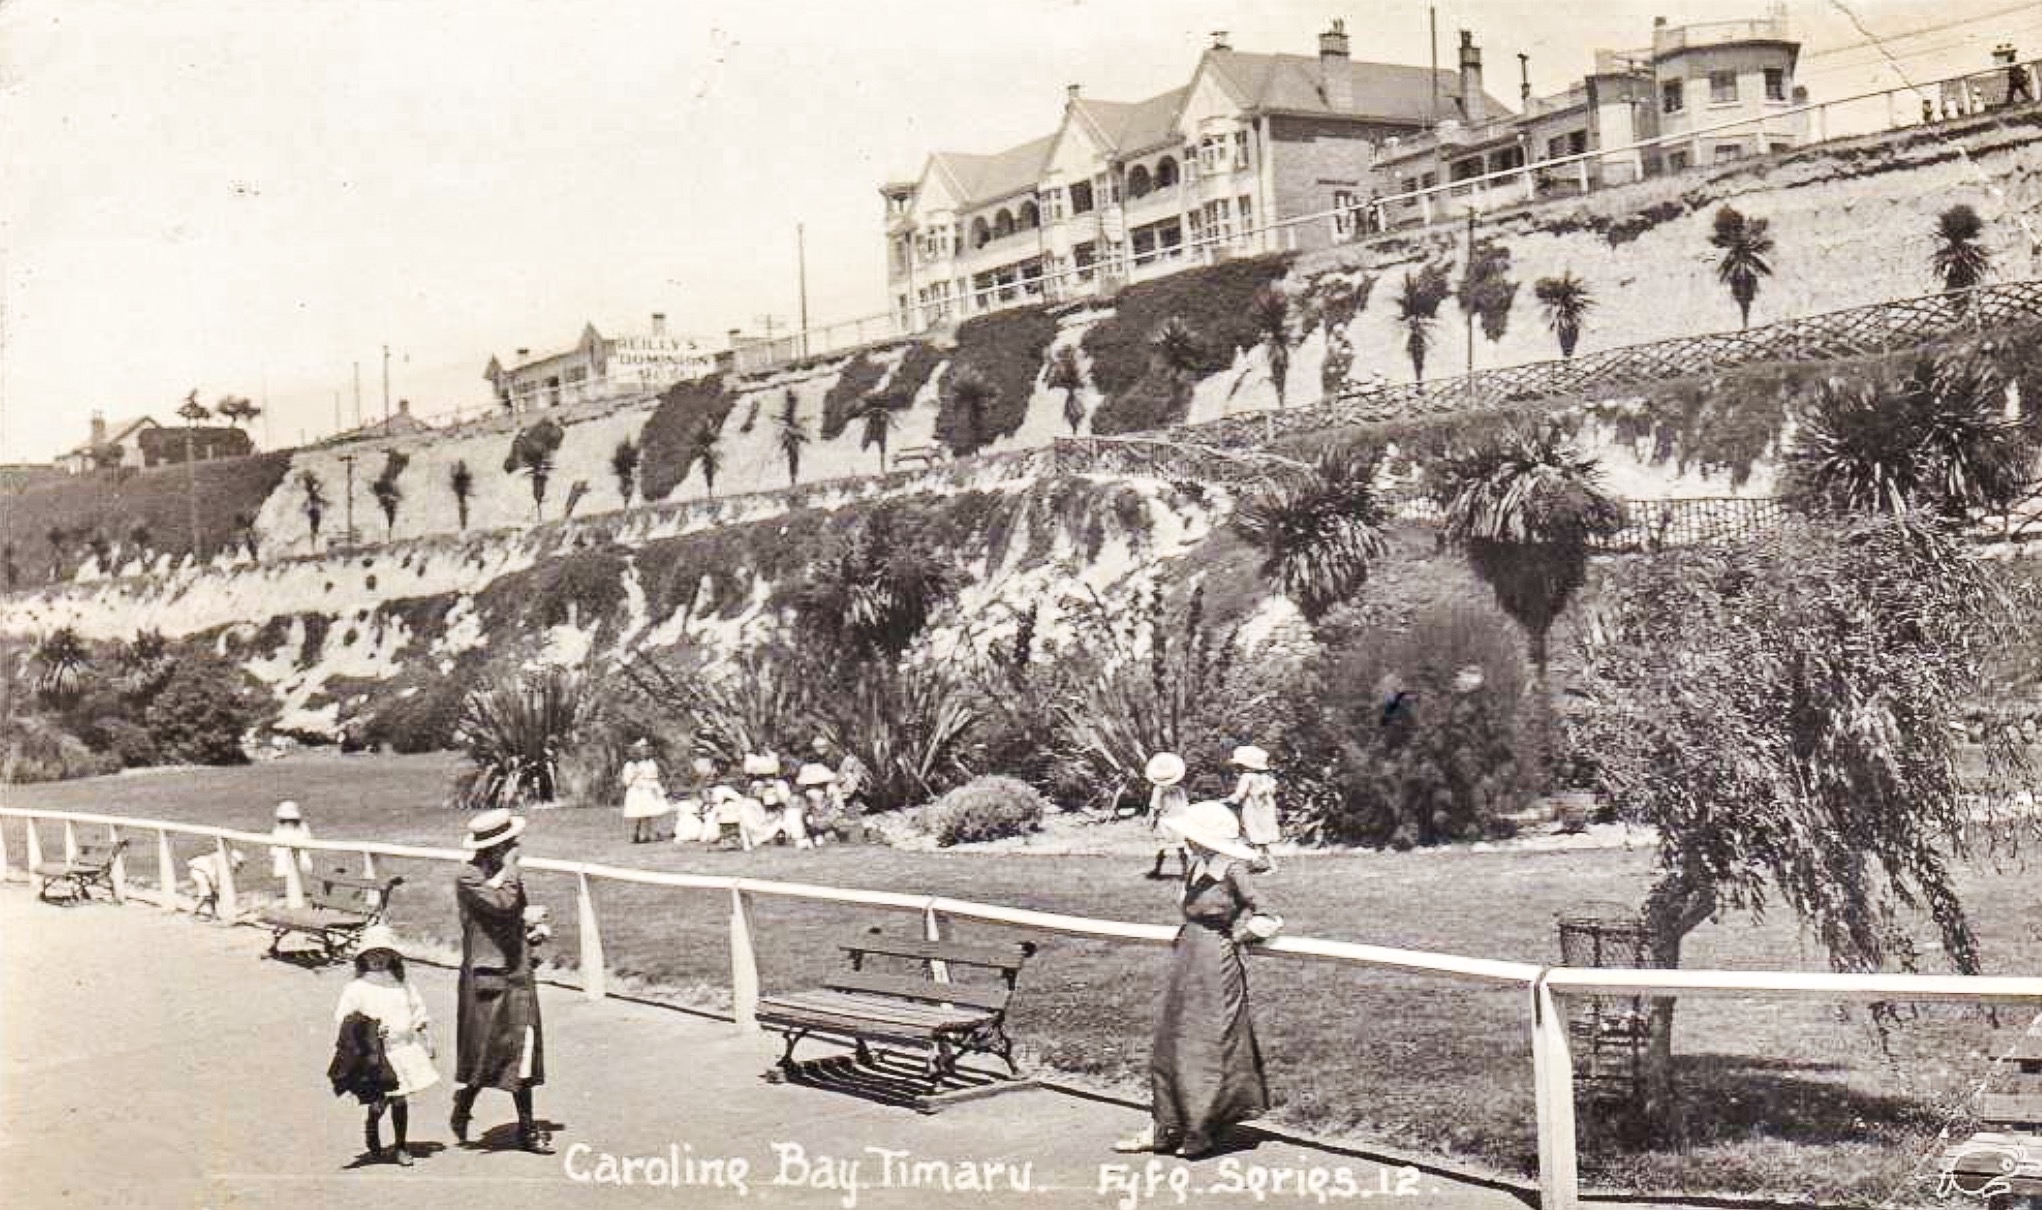 View of Hydro Grand Hotel from Caroline Bay